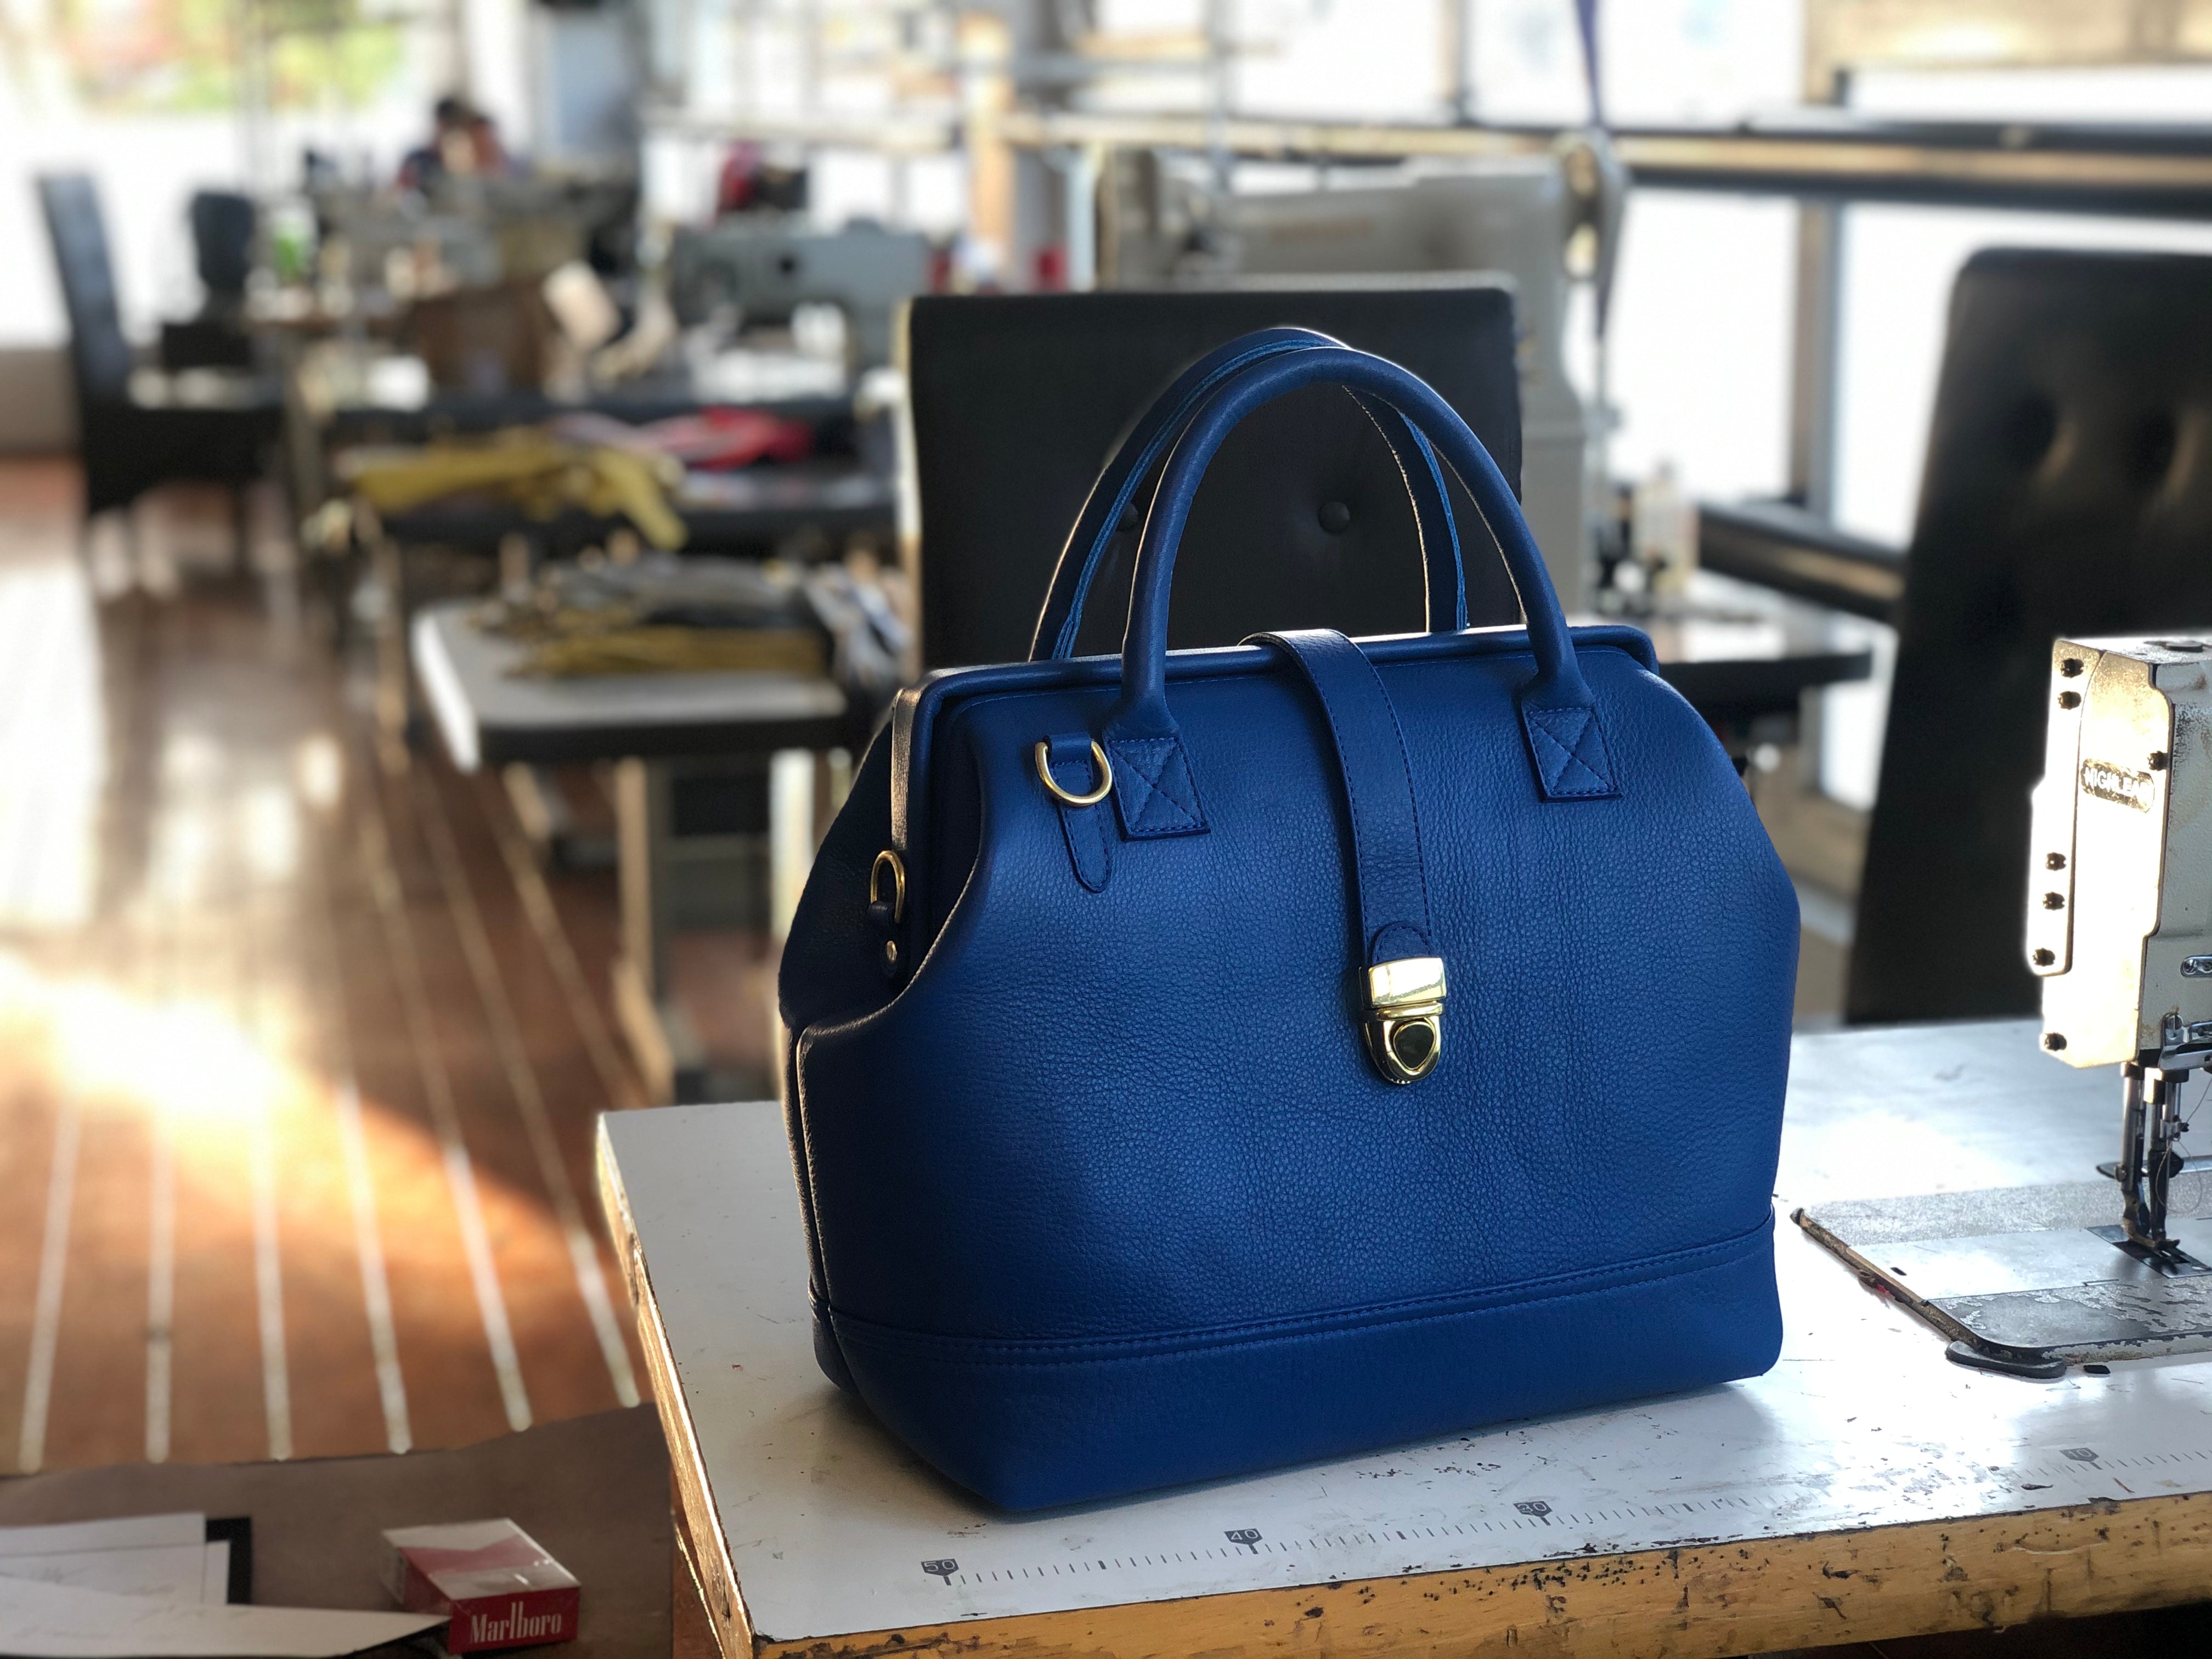 Unveiling Elegance: Qualities of a Well-Made Handbag